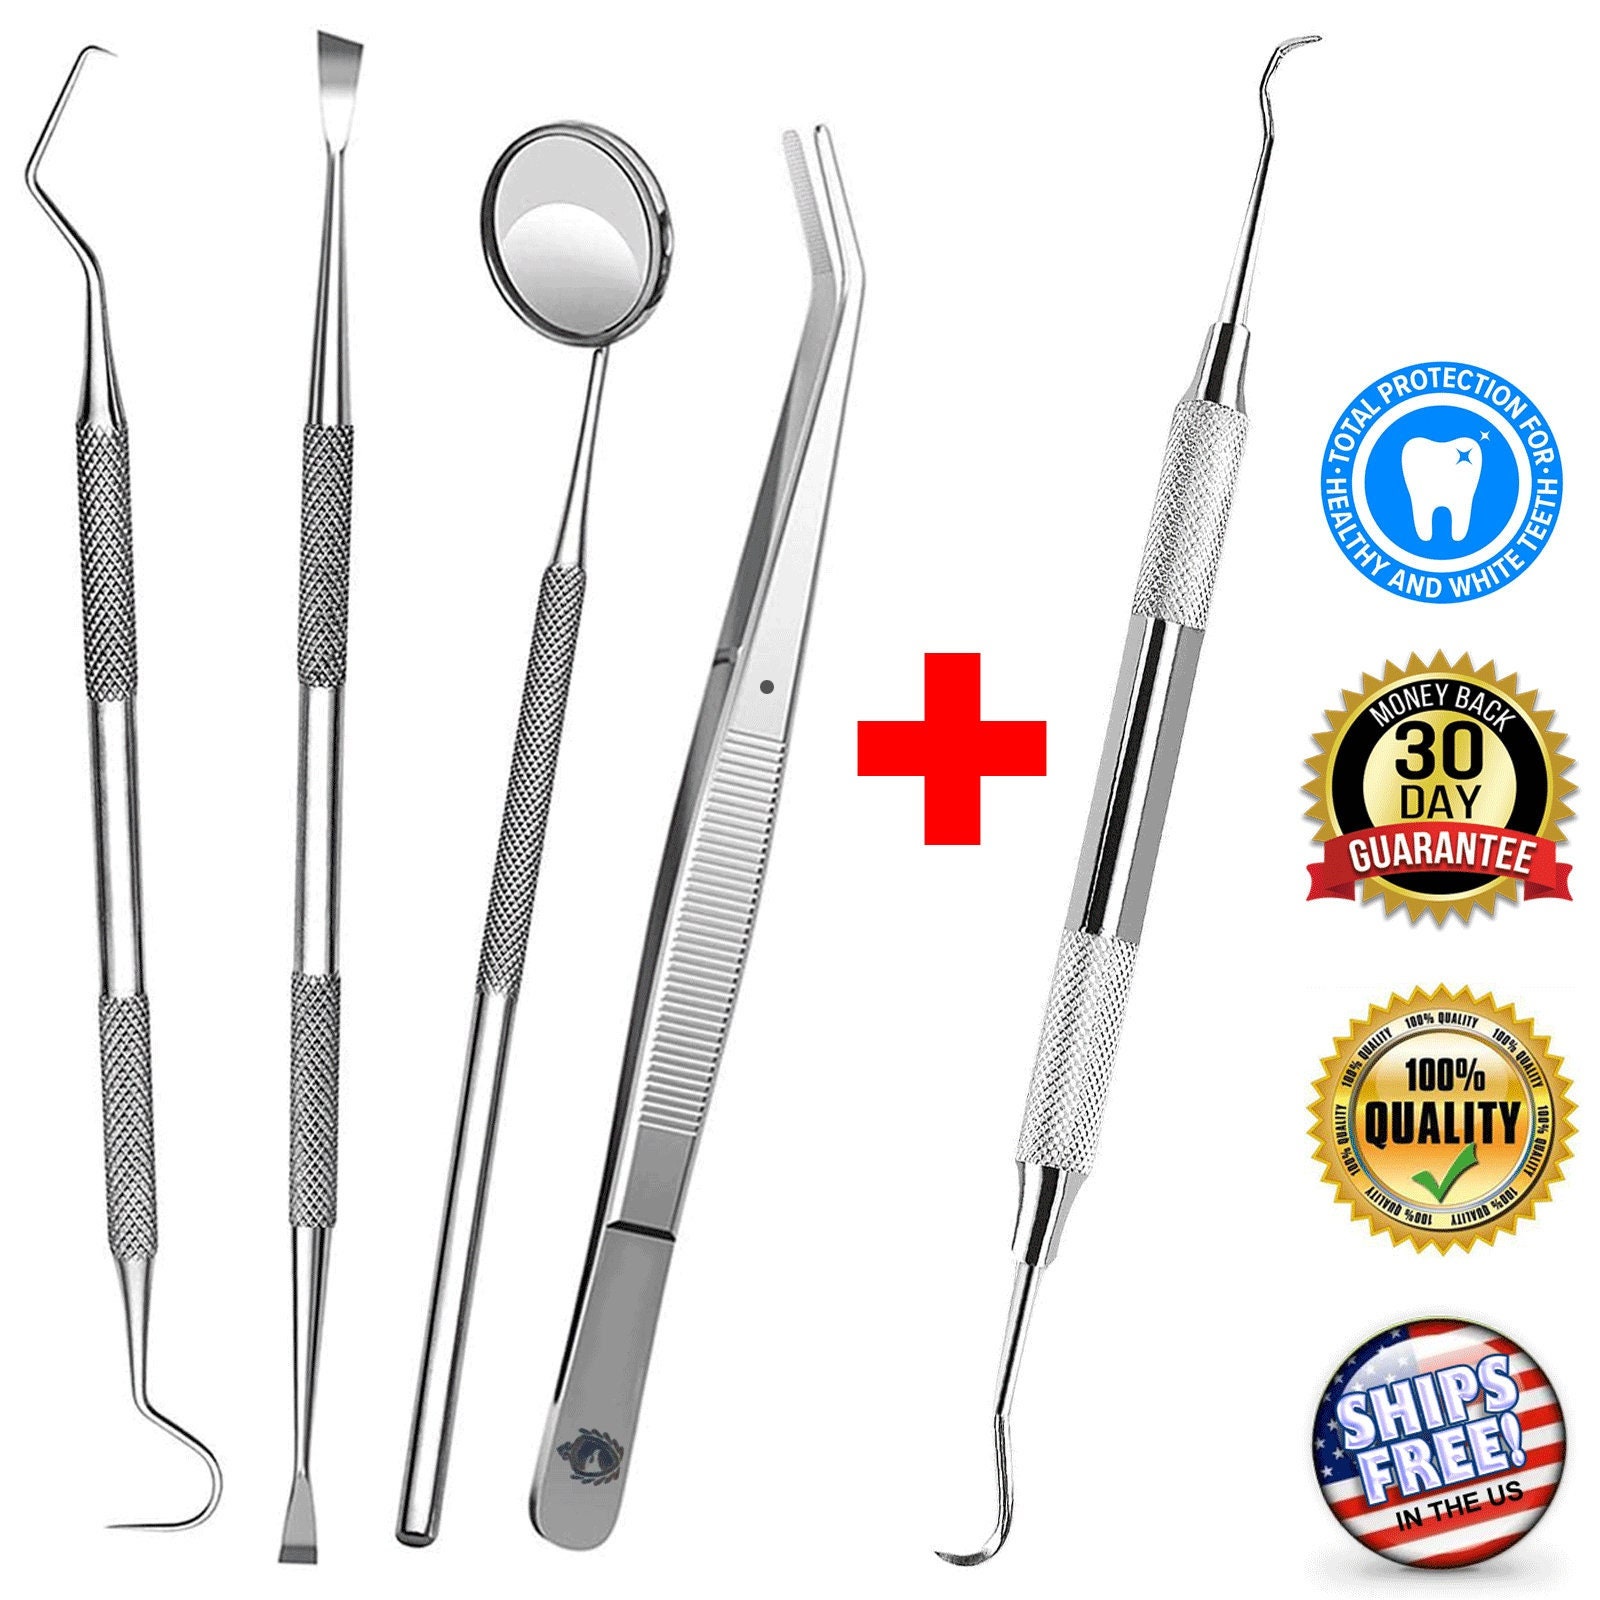 100 Dental Instruments And Their Uses  Dental instruments, Dental tools  names, Dental